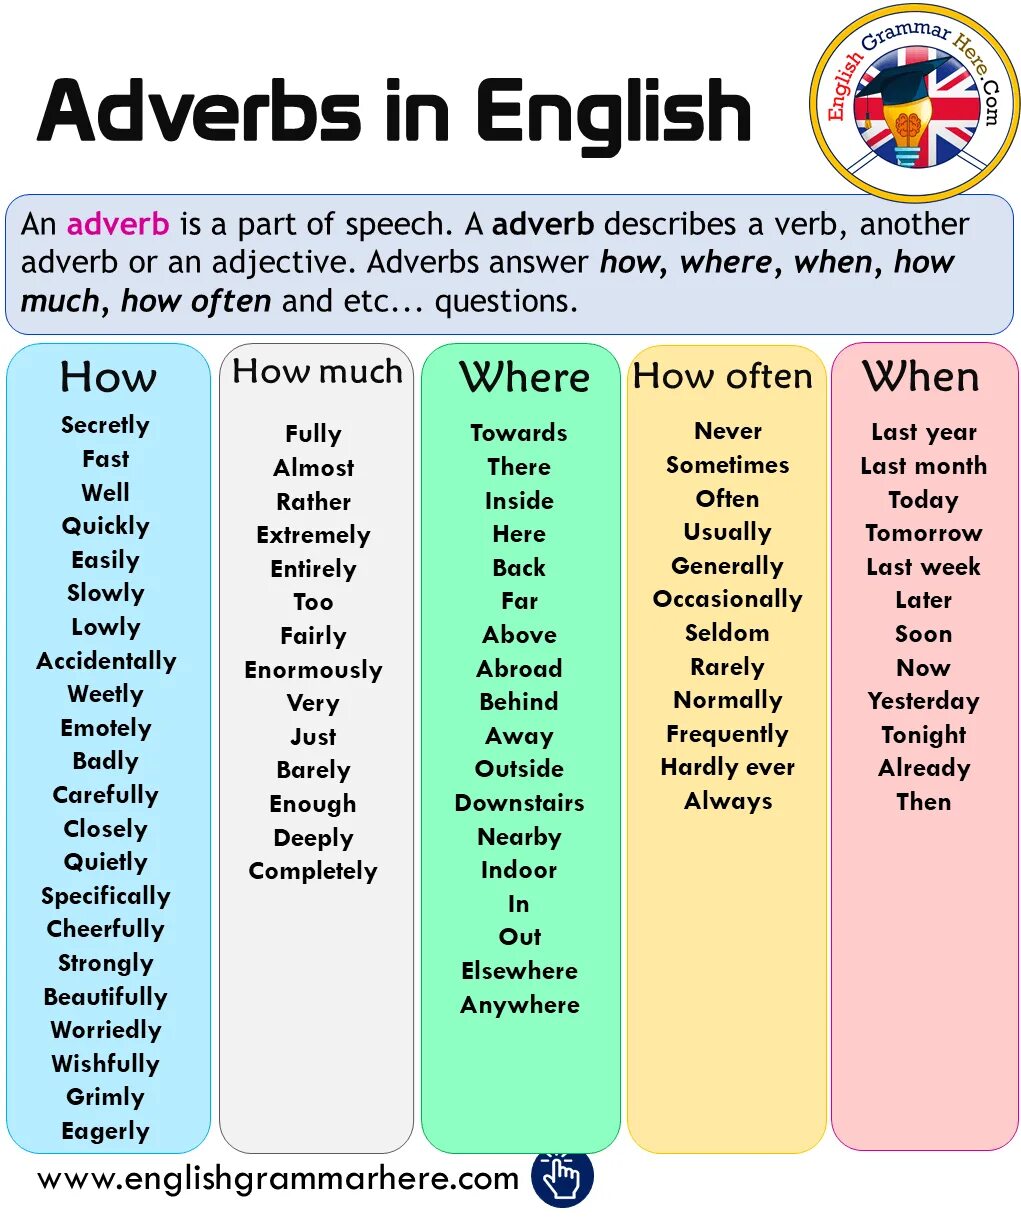 Adverbs. English adverbs. Adverbs in English. Наречия в английском языке. Adverbs careful